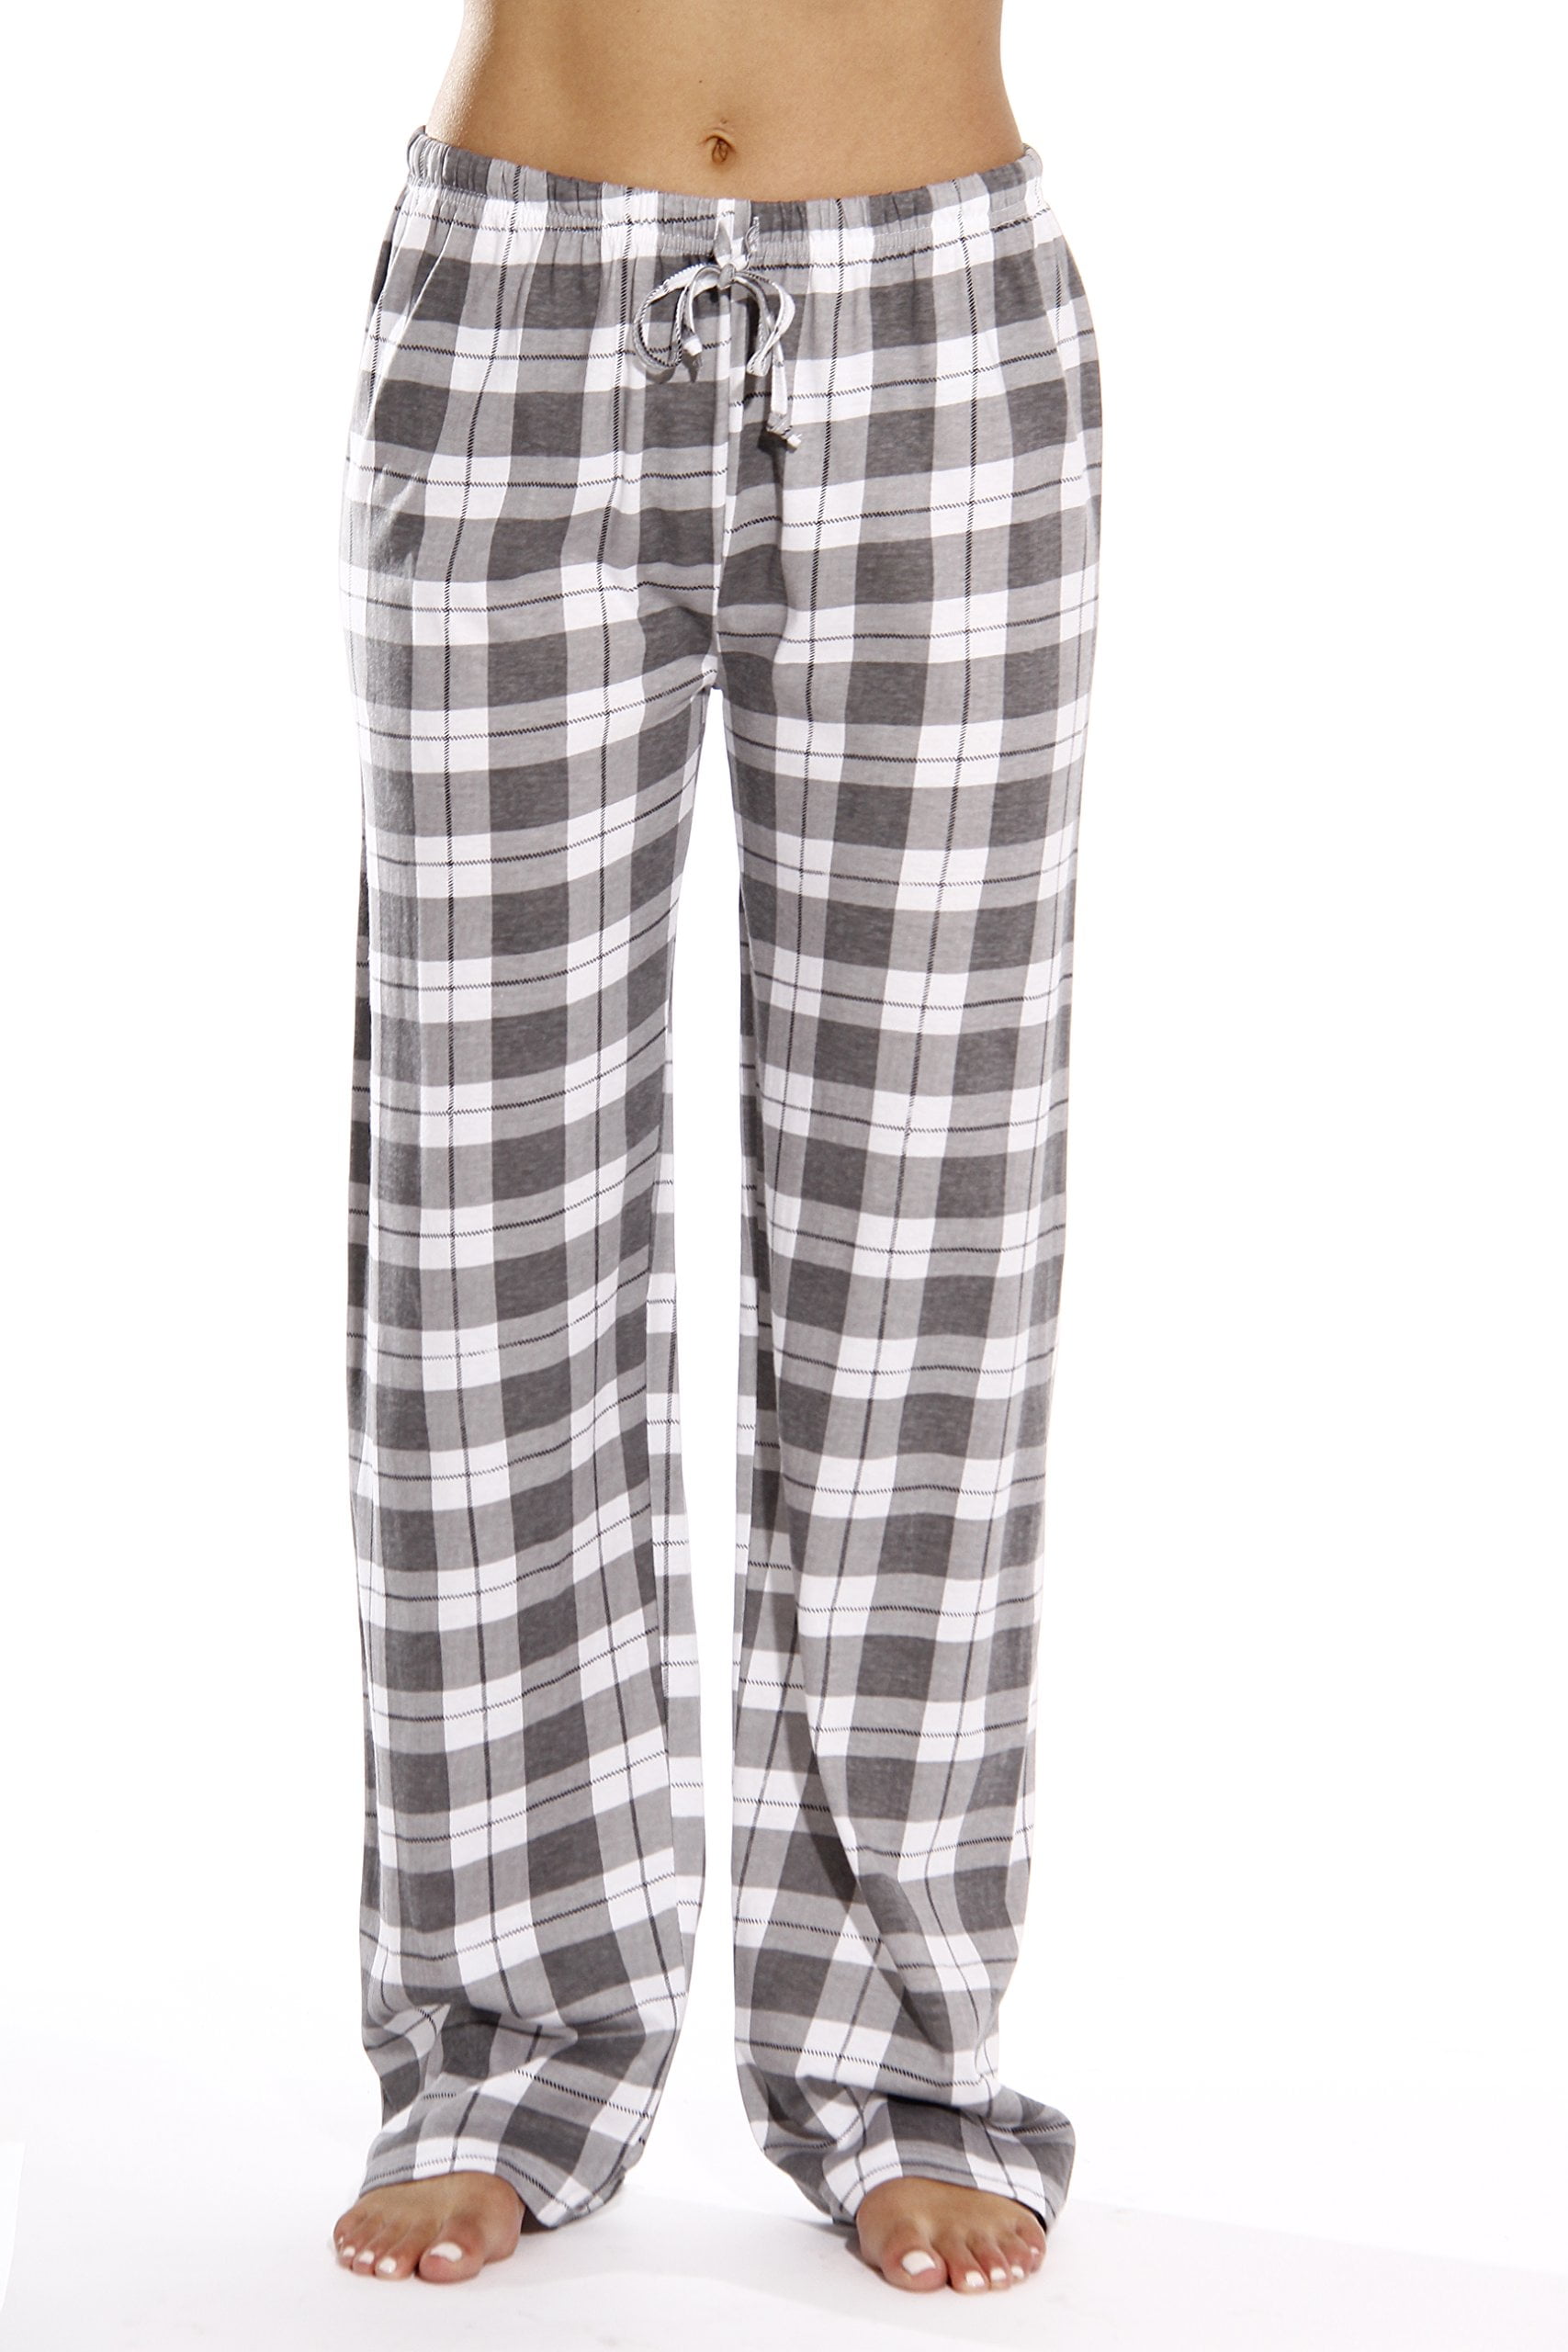 Just Love 100% Cotton Jersey Knit Women Pajama Pants Sleepwear 